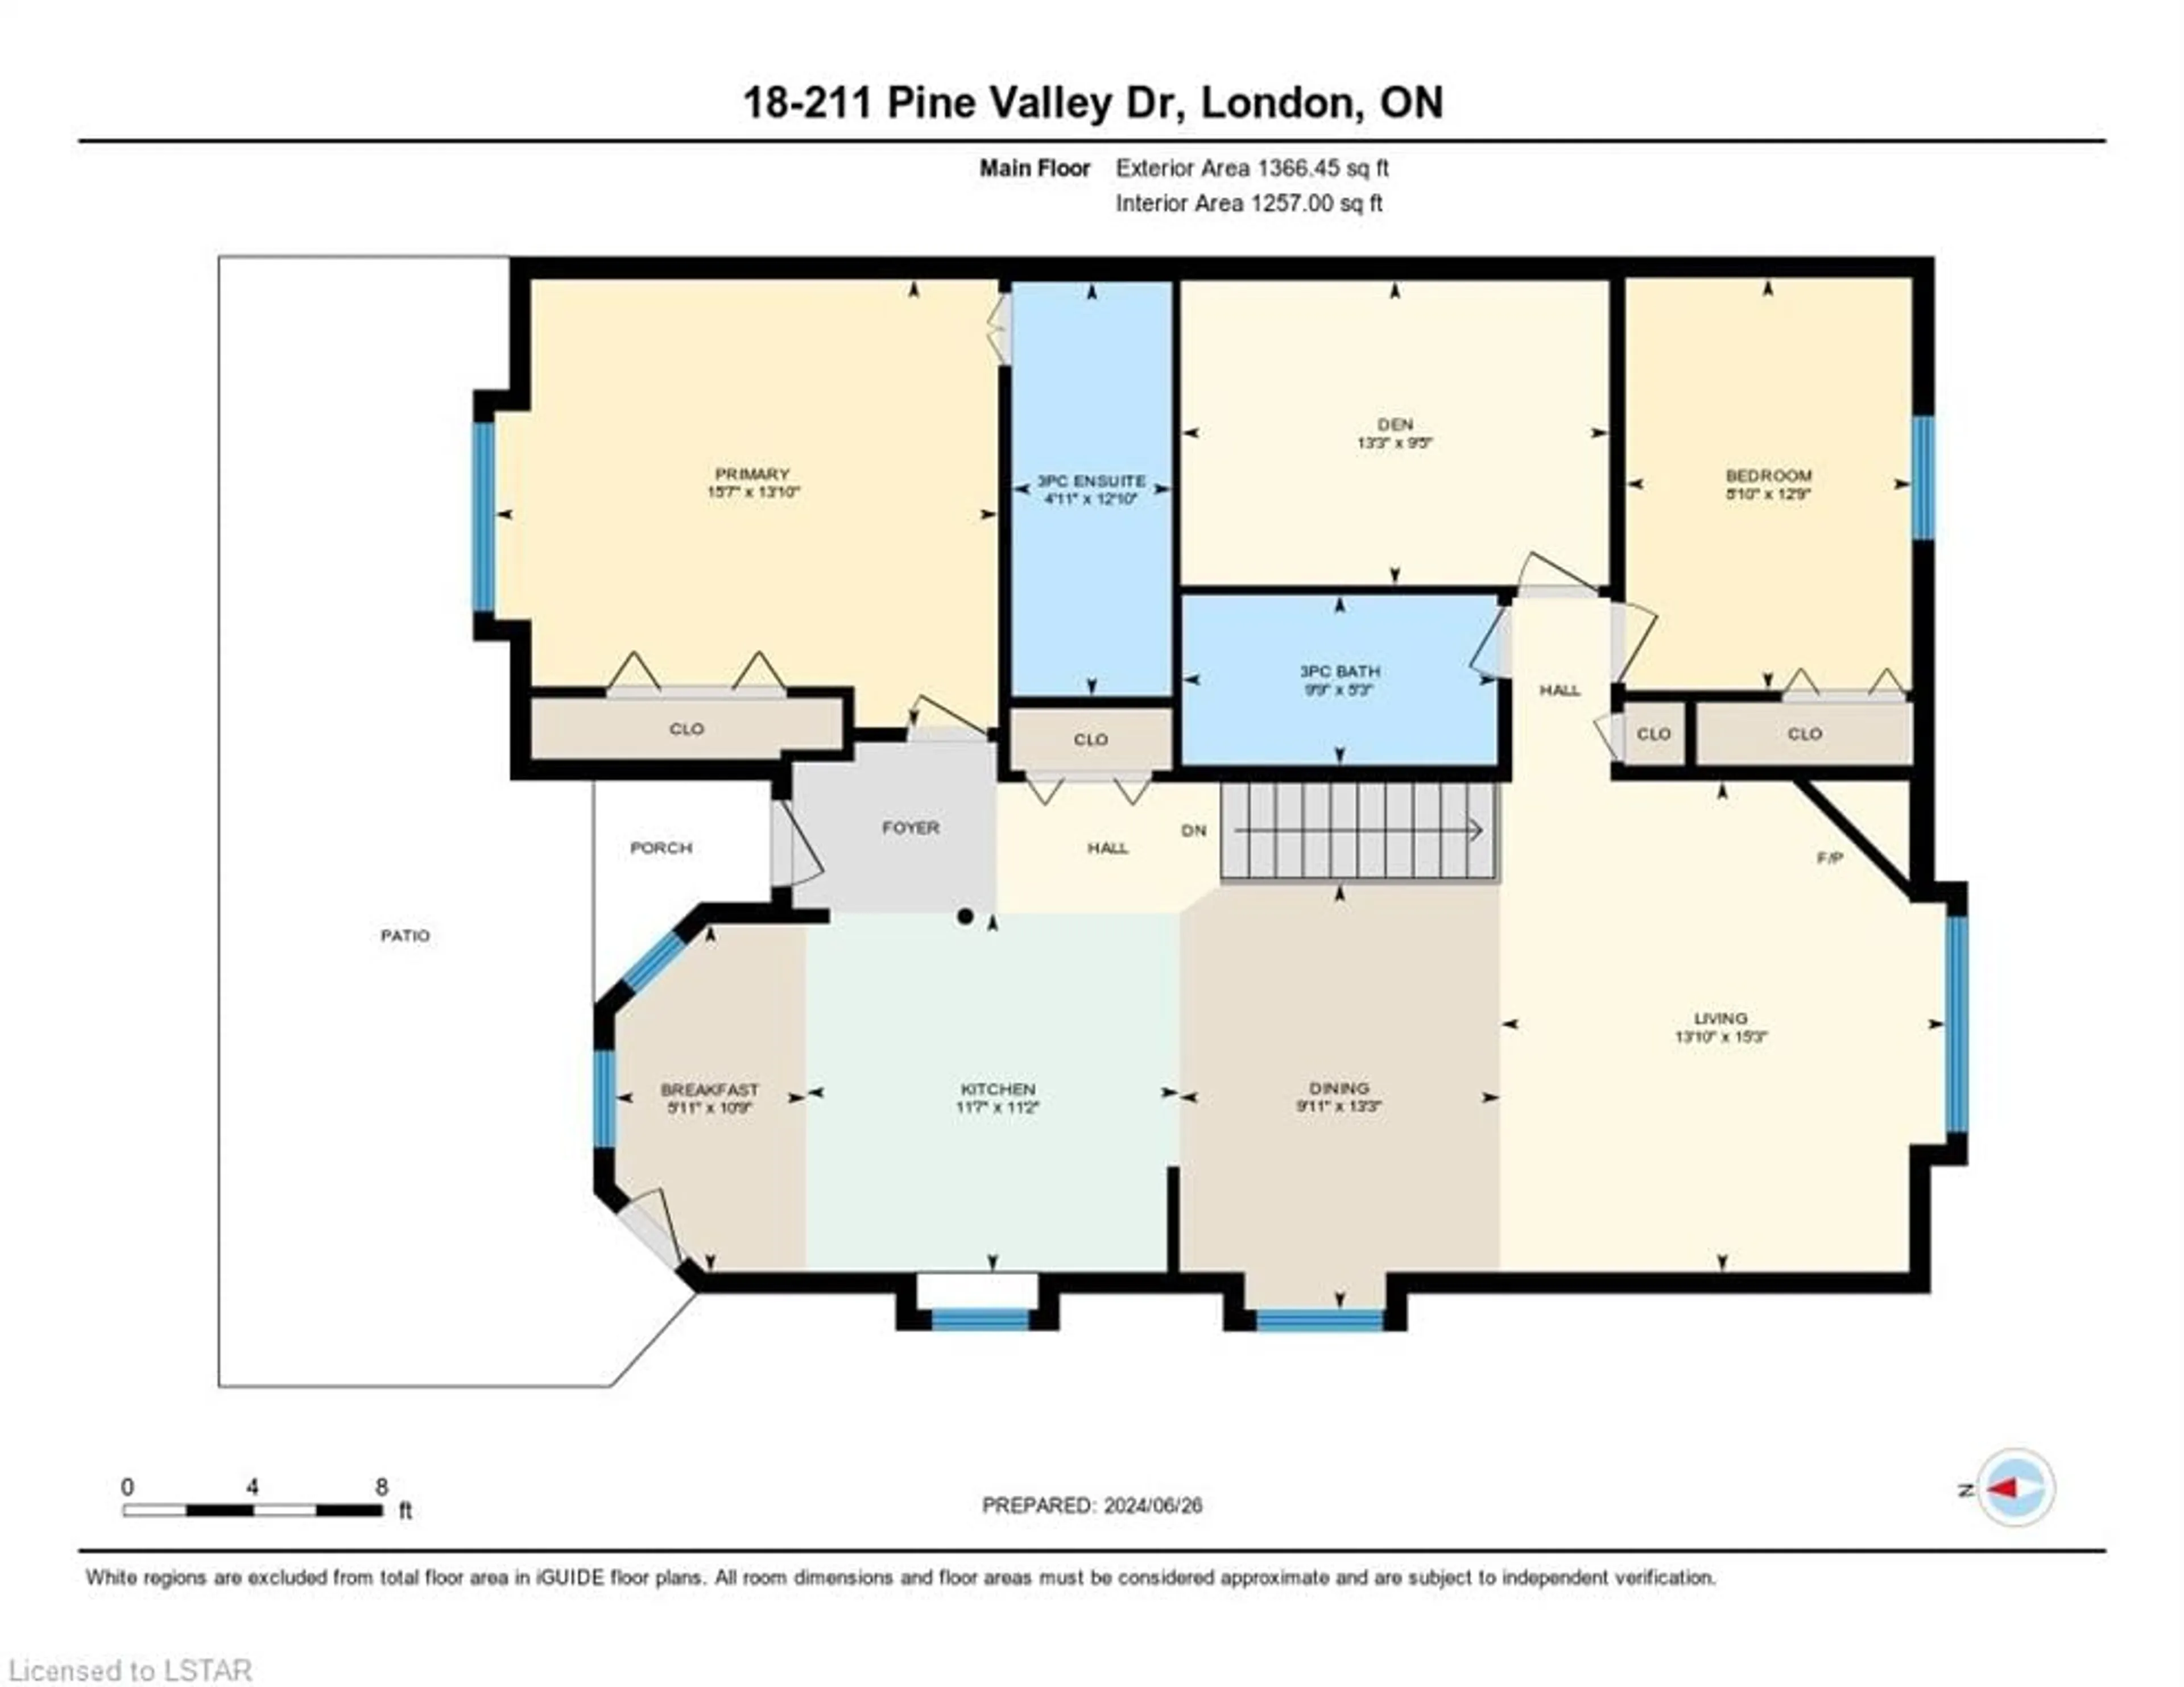 Floor plan for 211 Pine Valley Dr #18, London Ontario N6J 4W5